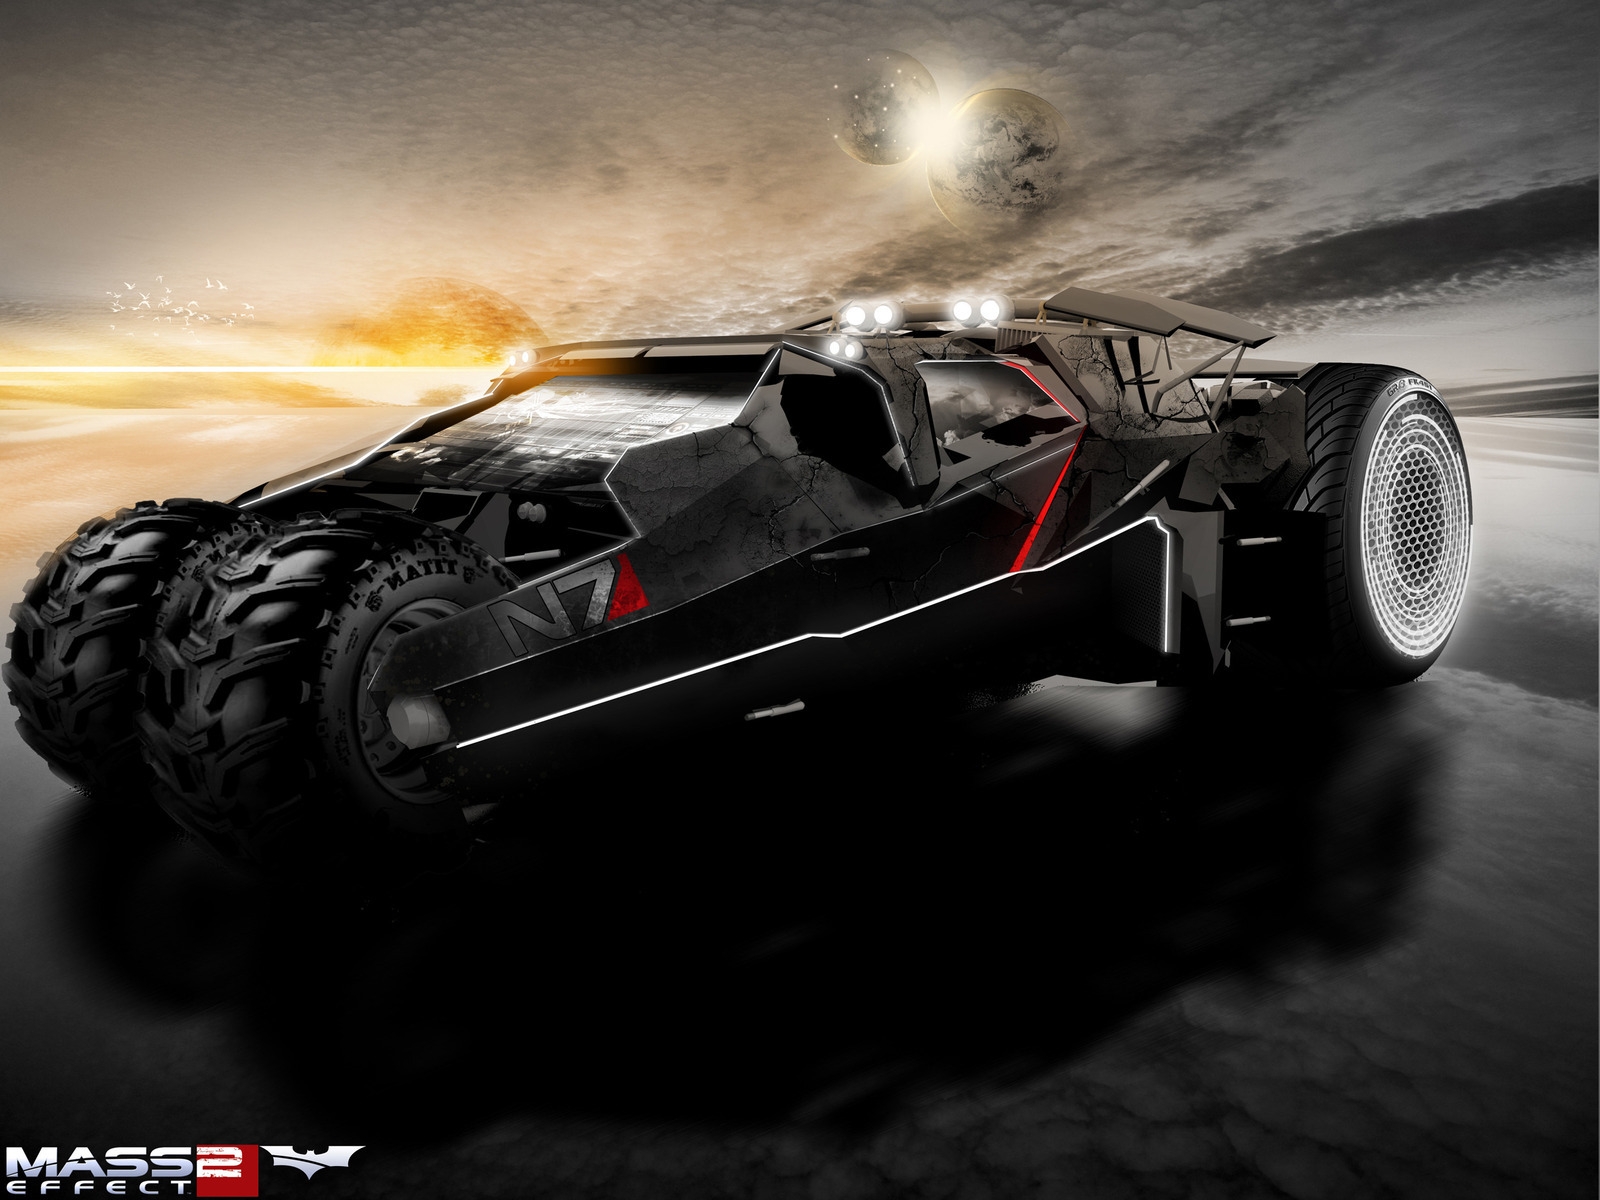 Mass Effect 2 Car for 1600 x 1200 resolution